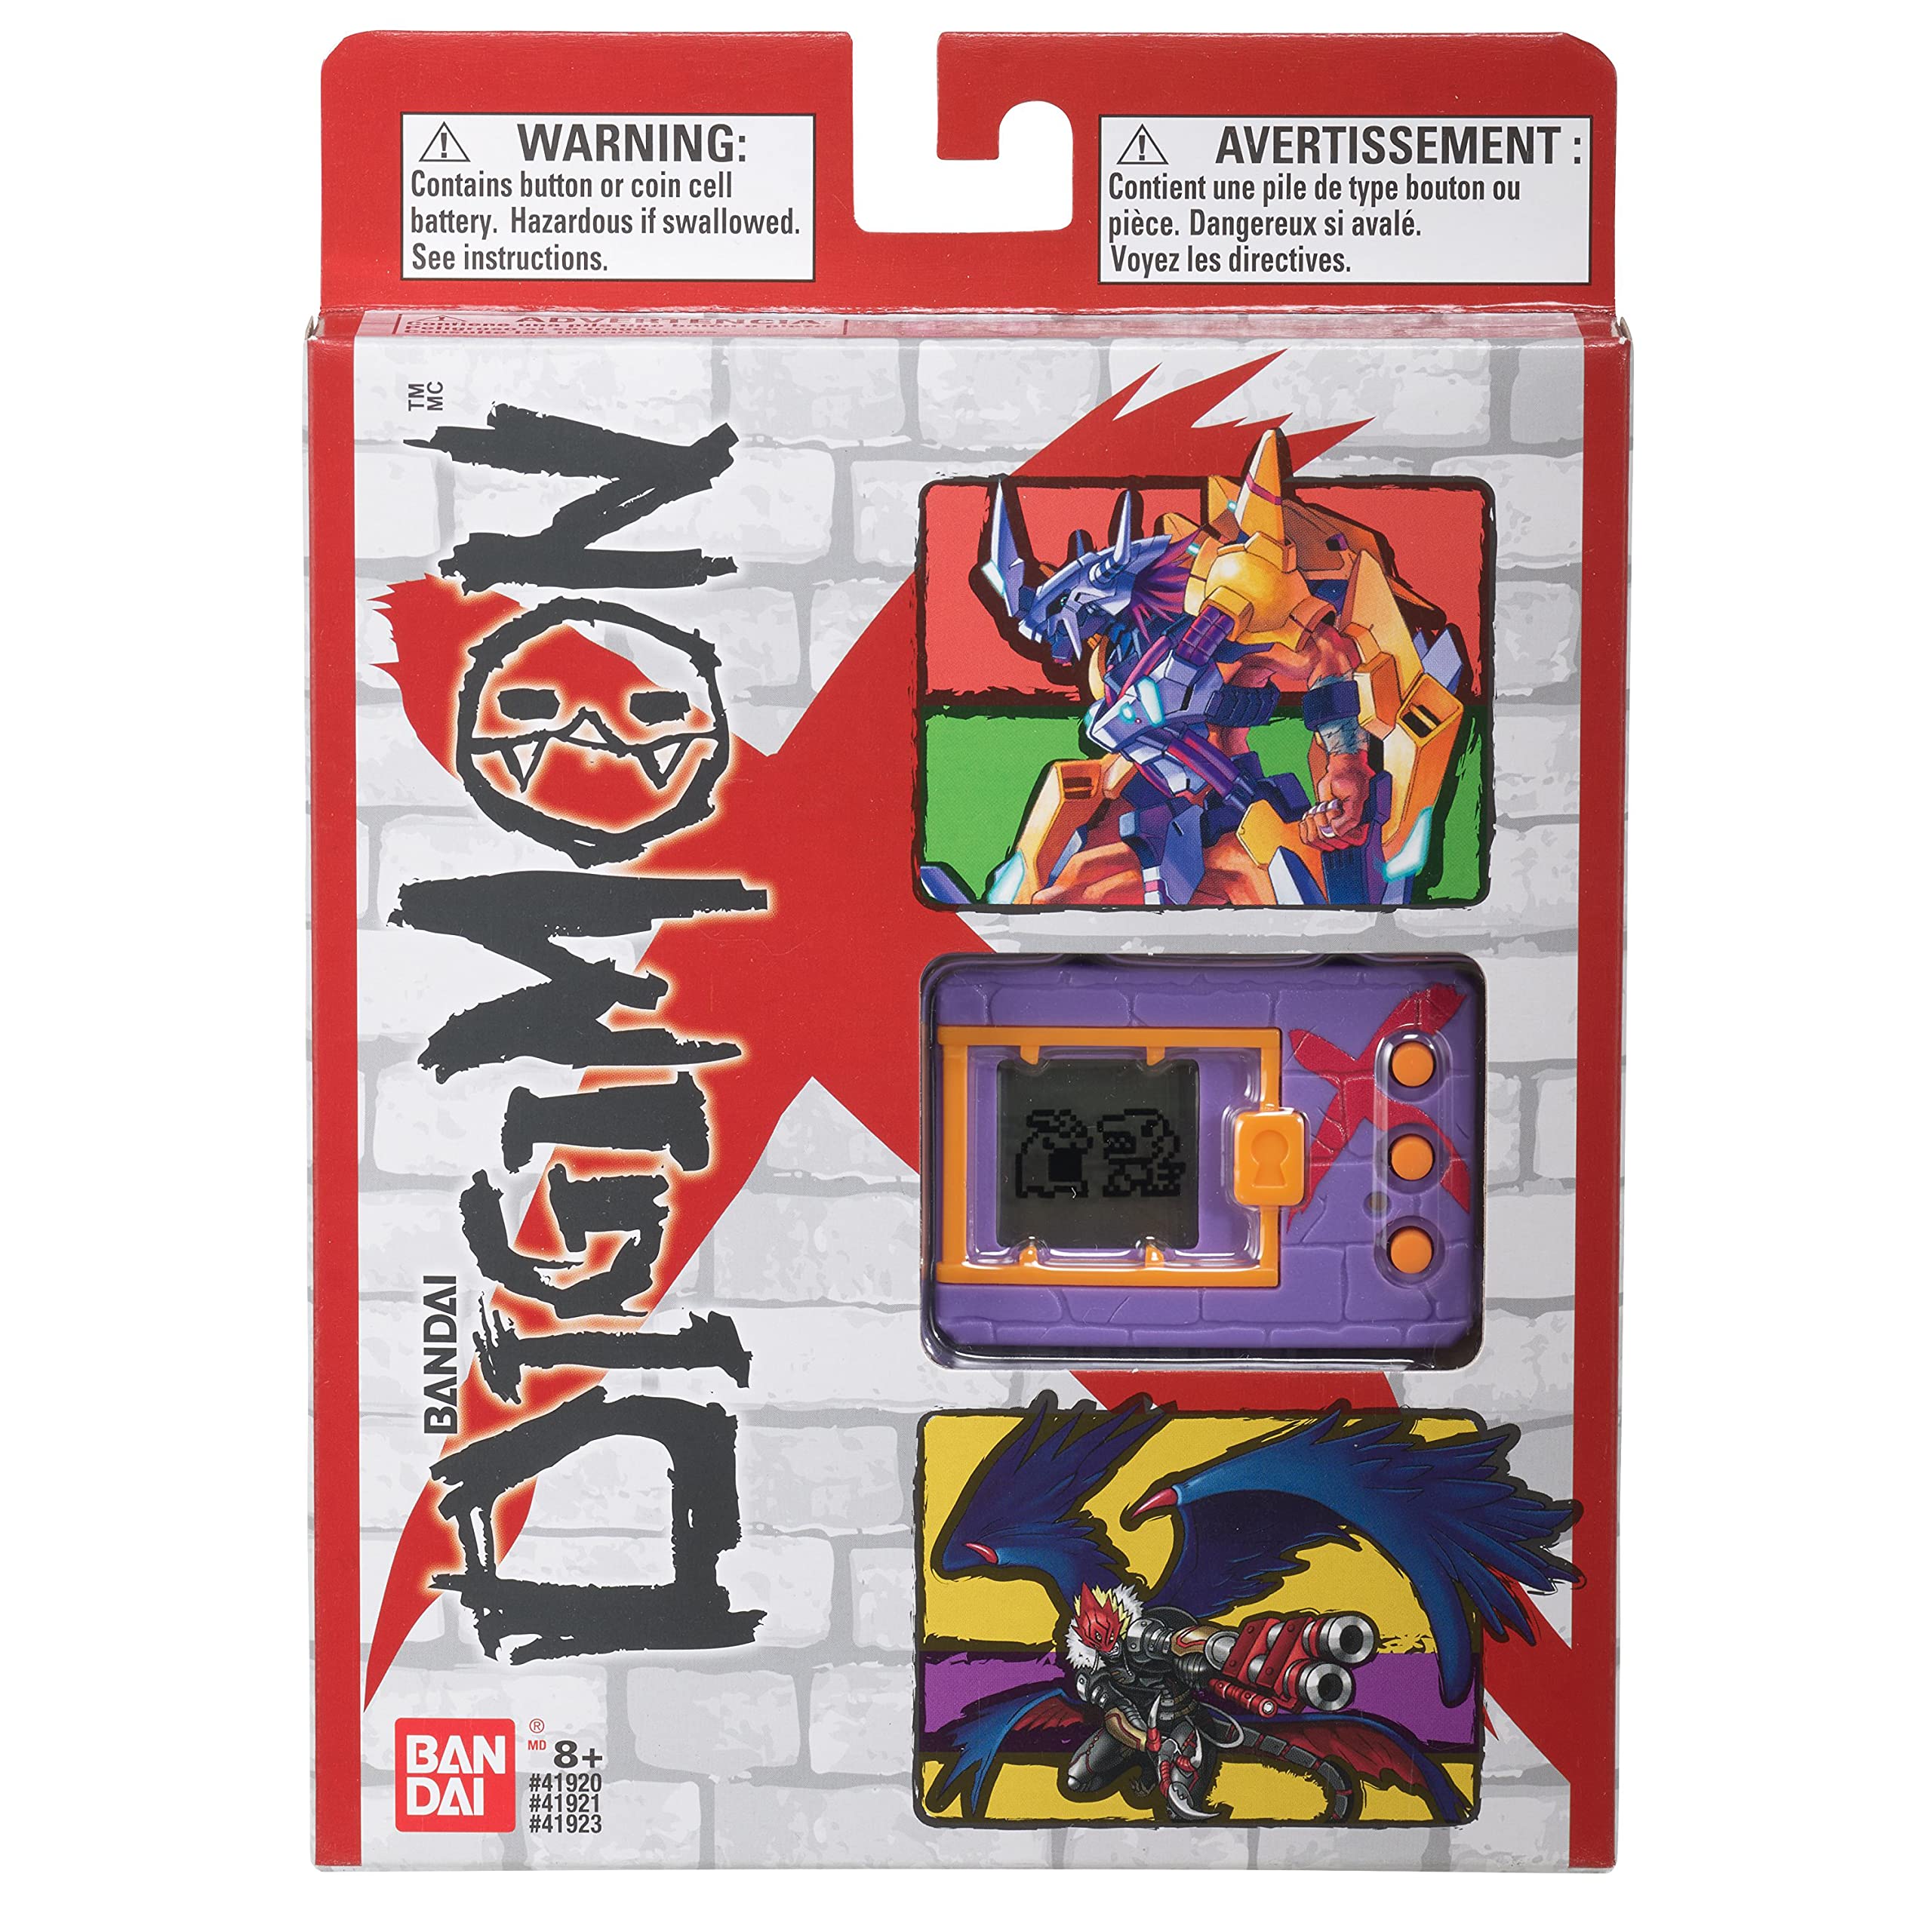 DIGIMON X Bandai Digivice Virtual Pet Monster - Purple & Red (41923) (Pack of 5)